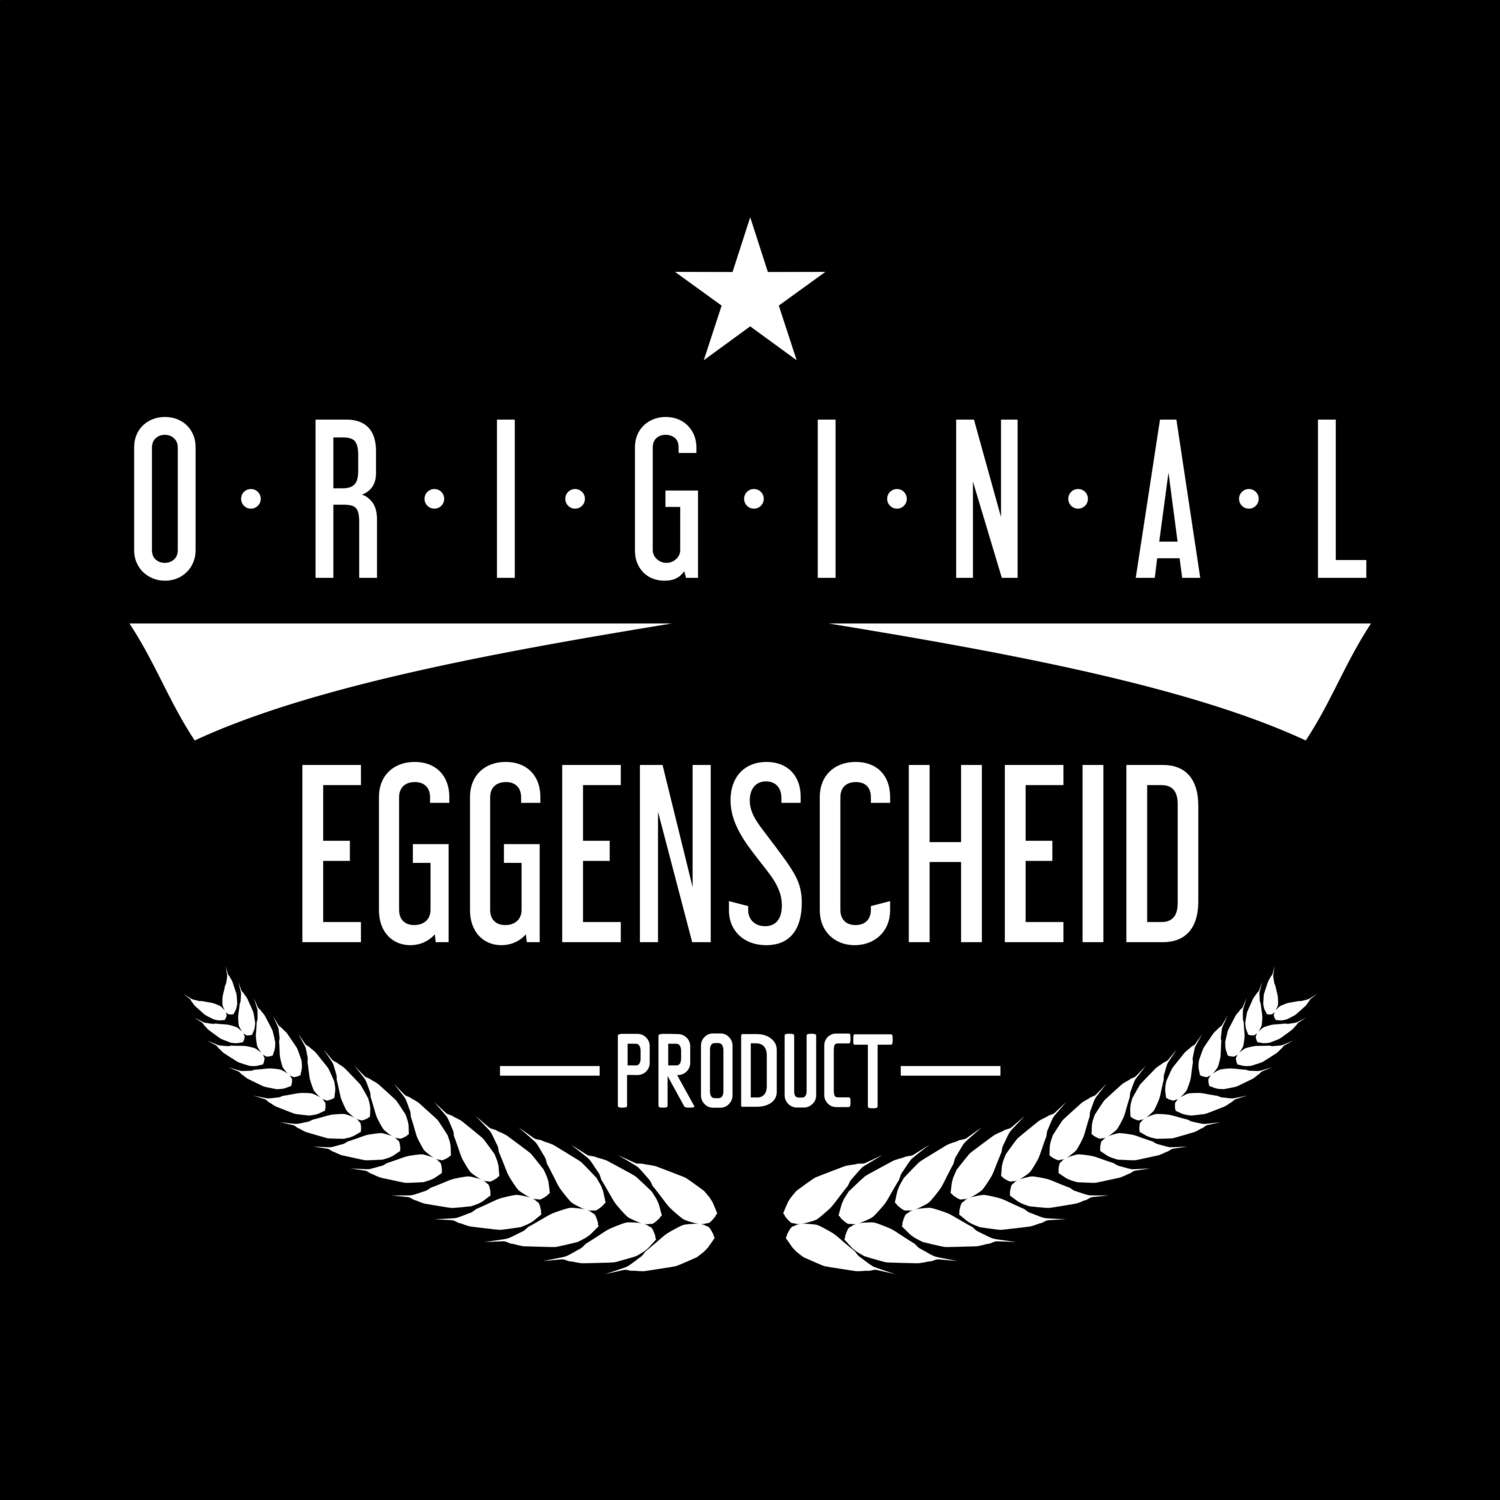 Eggenscheid T-Shirt »Original Product«